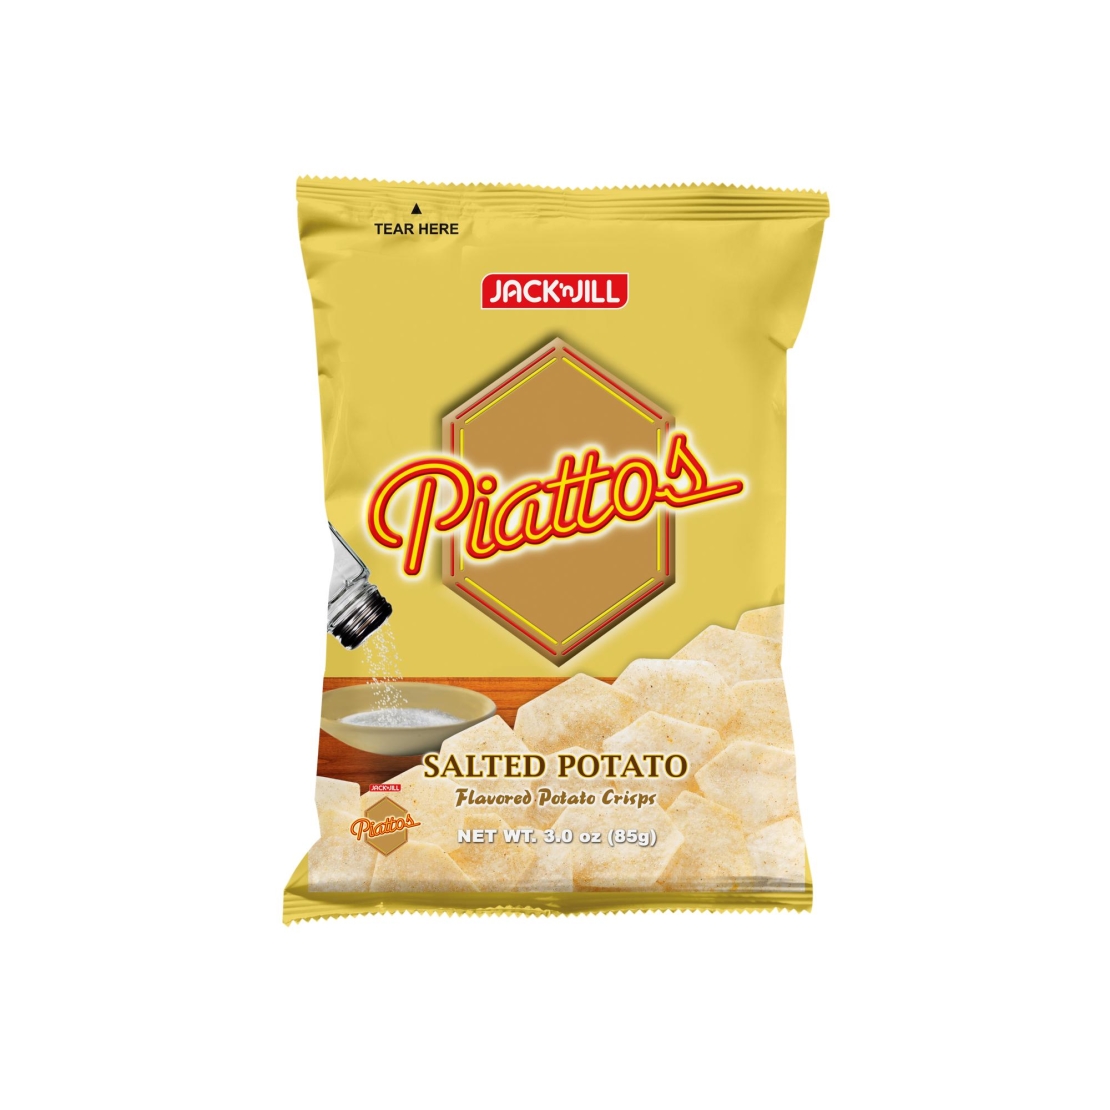 Piattos - Salted Potato Flavored Potato Crisps 85g 